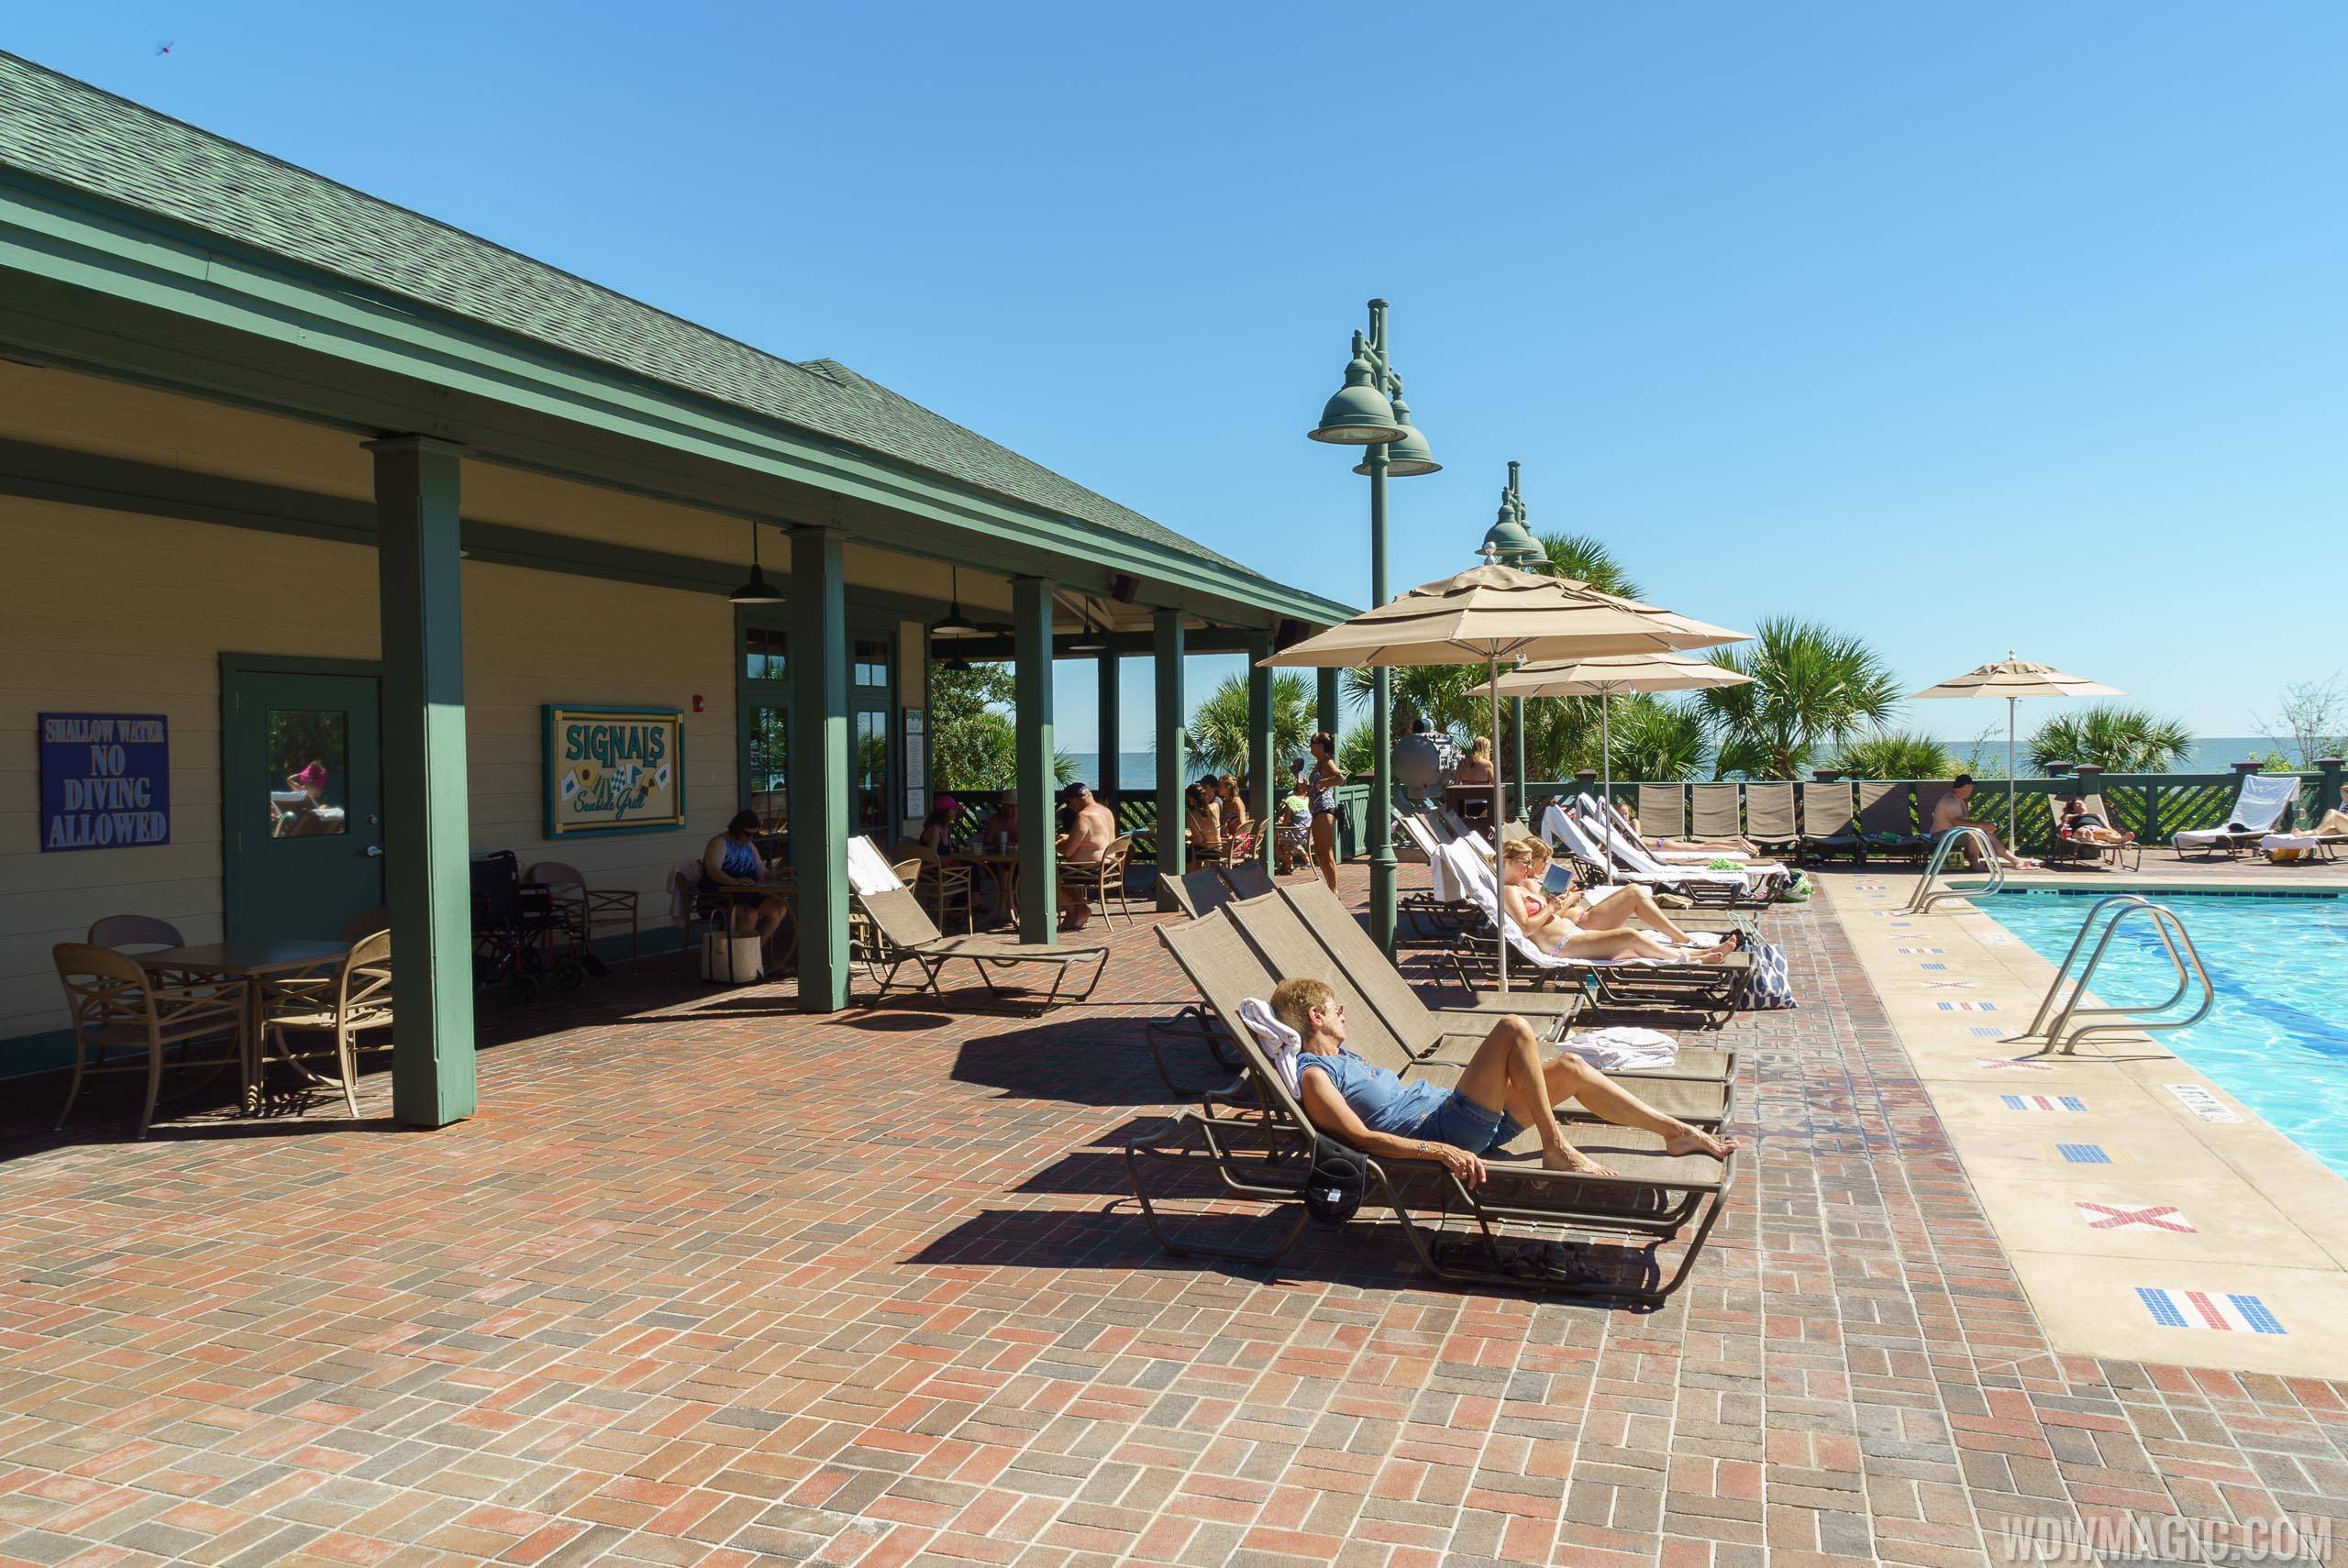 Disney's Hilton Head Island Resort - Beach House at Palmetto Dunes Beach Park